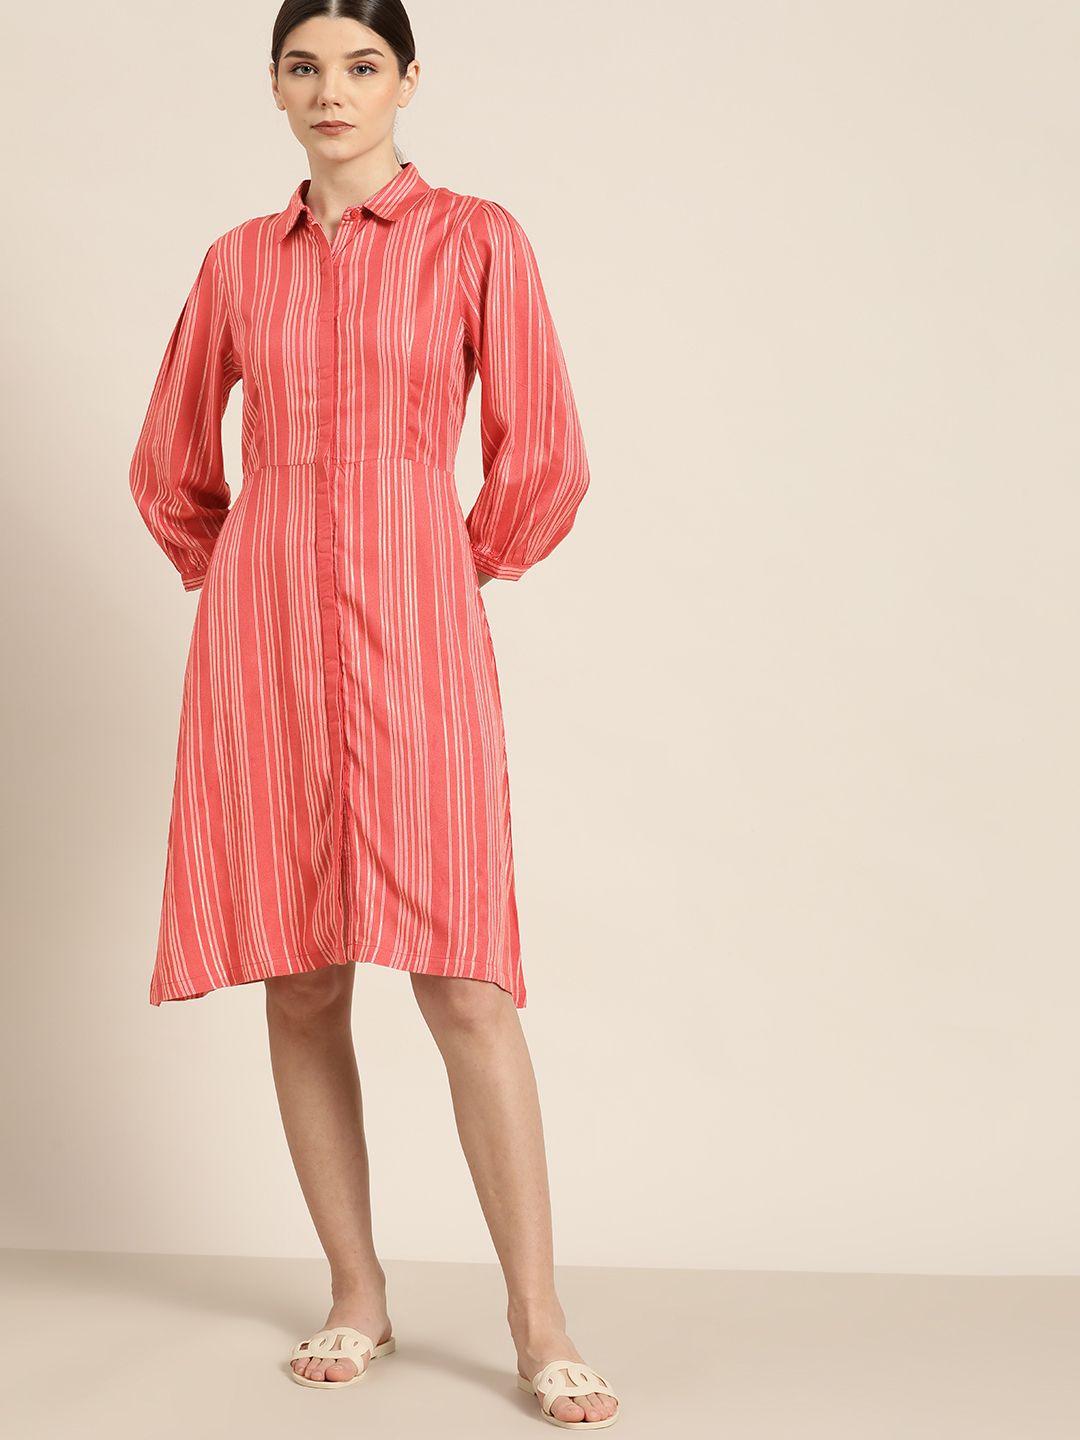 ether women pink & white striped shirt dress